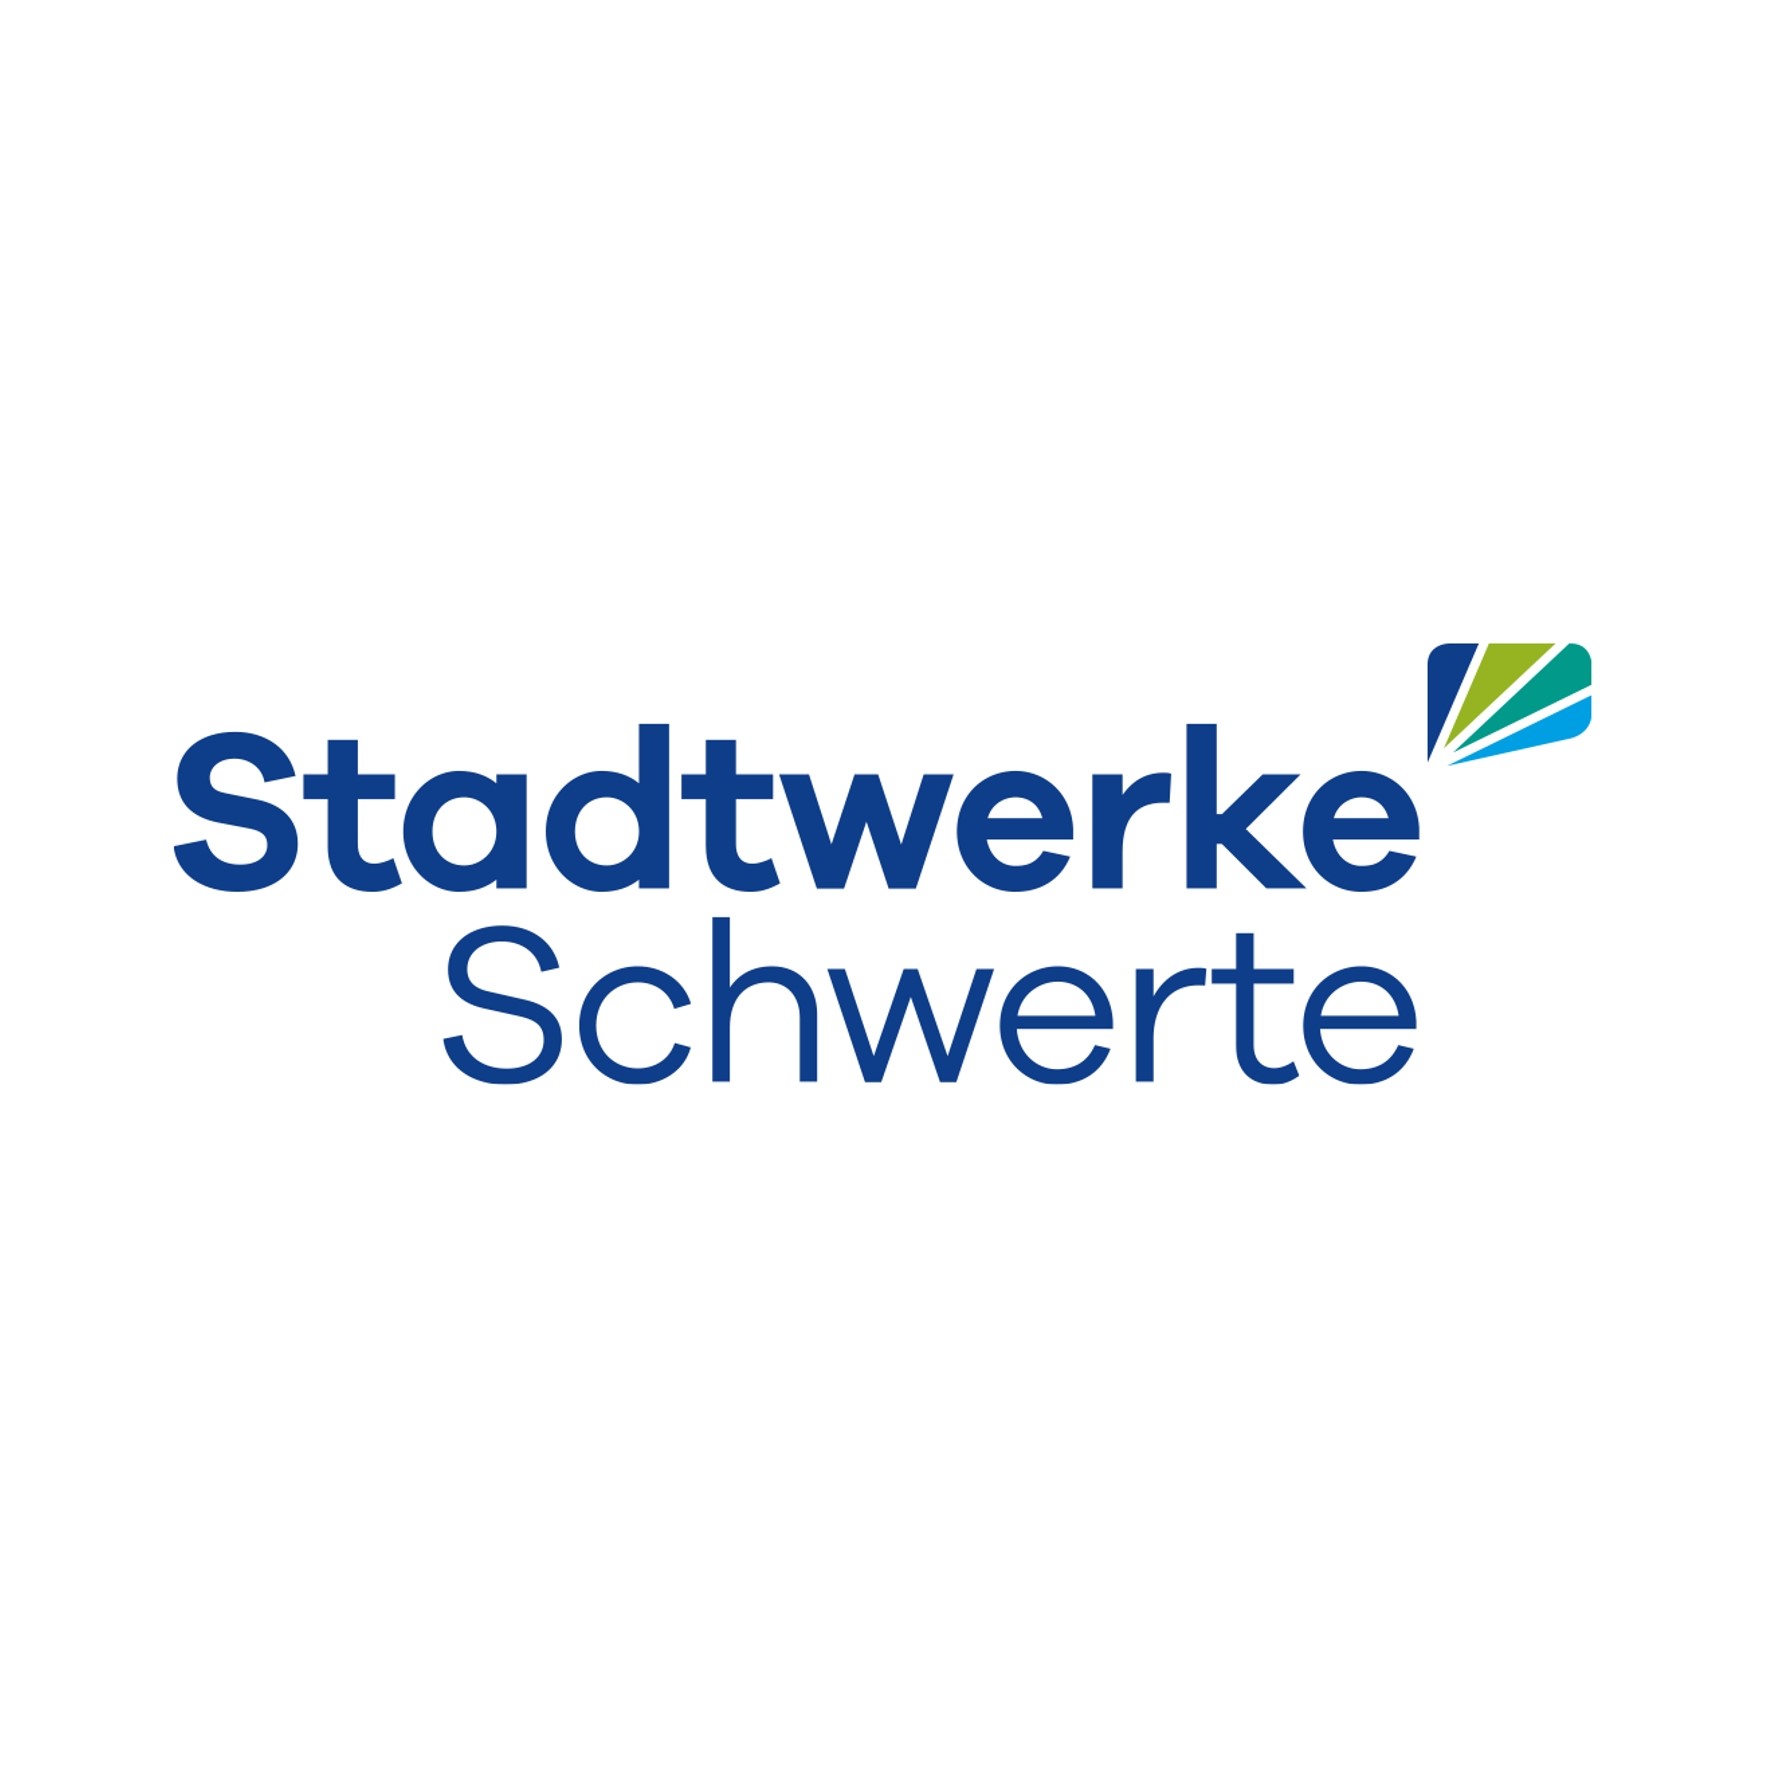 Stadtwerke Schwerte Logo